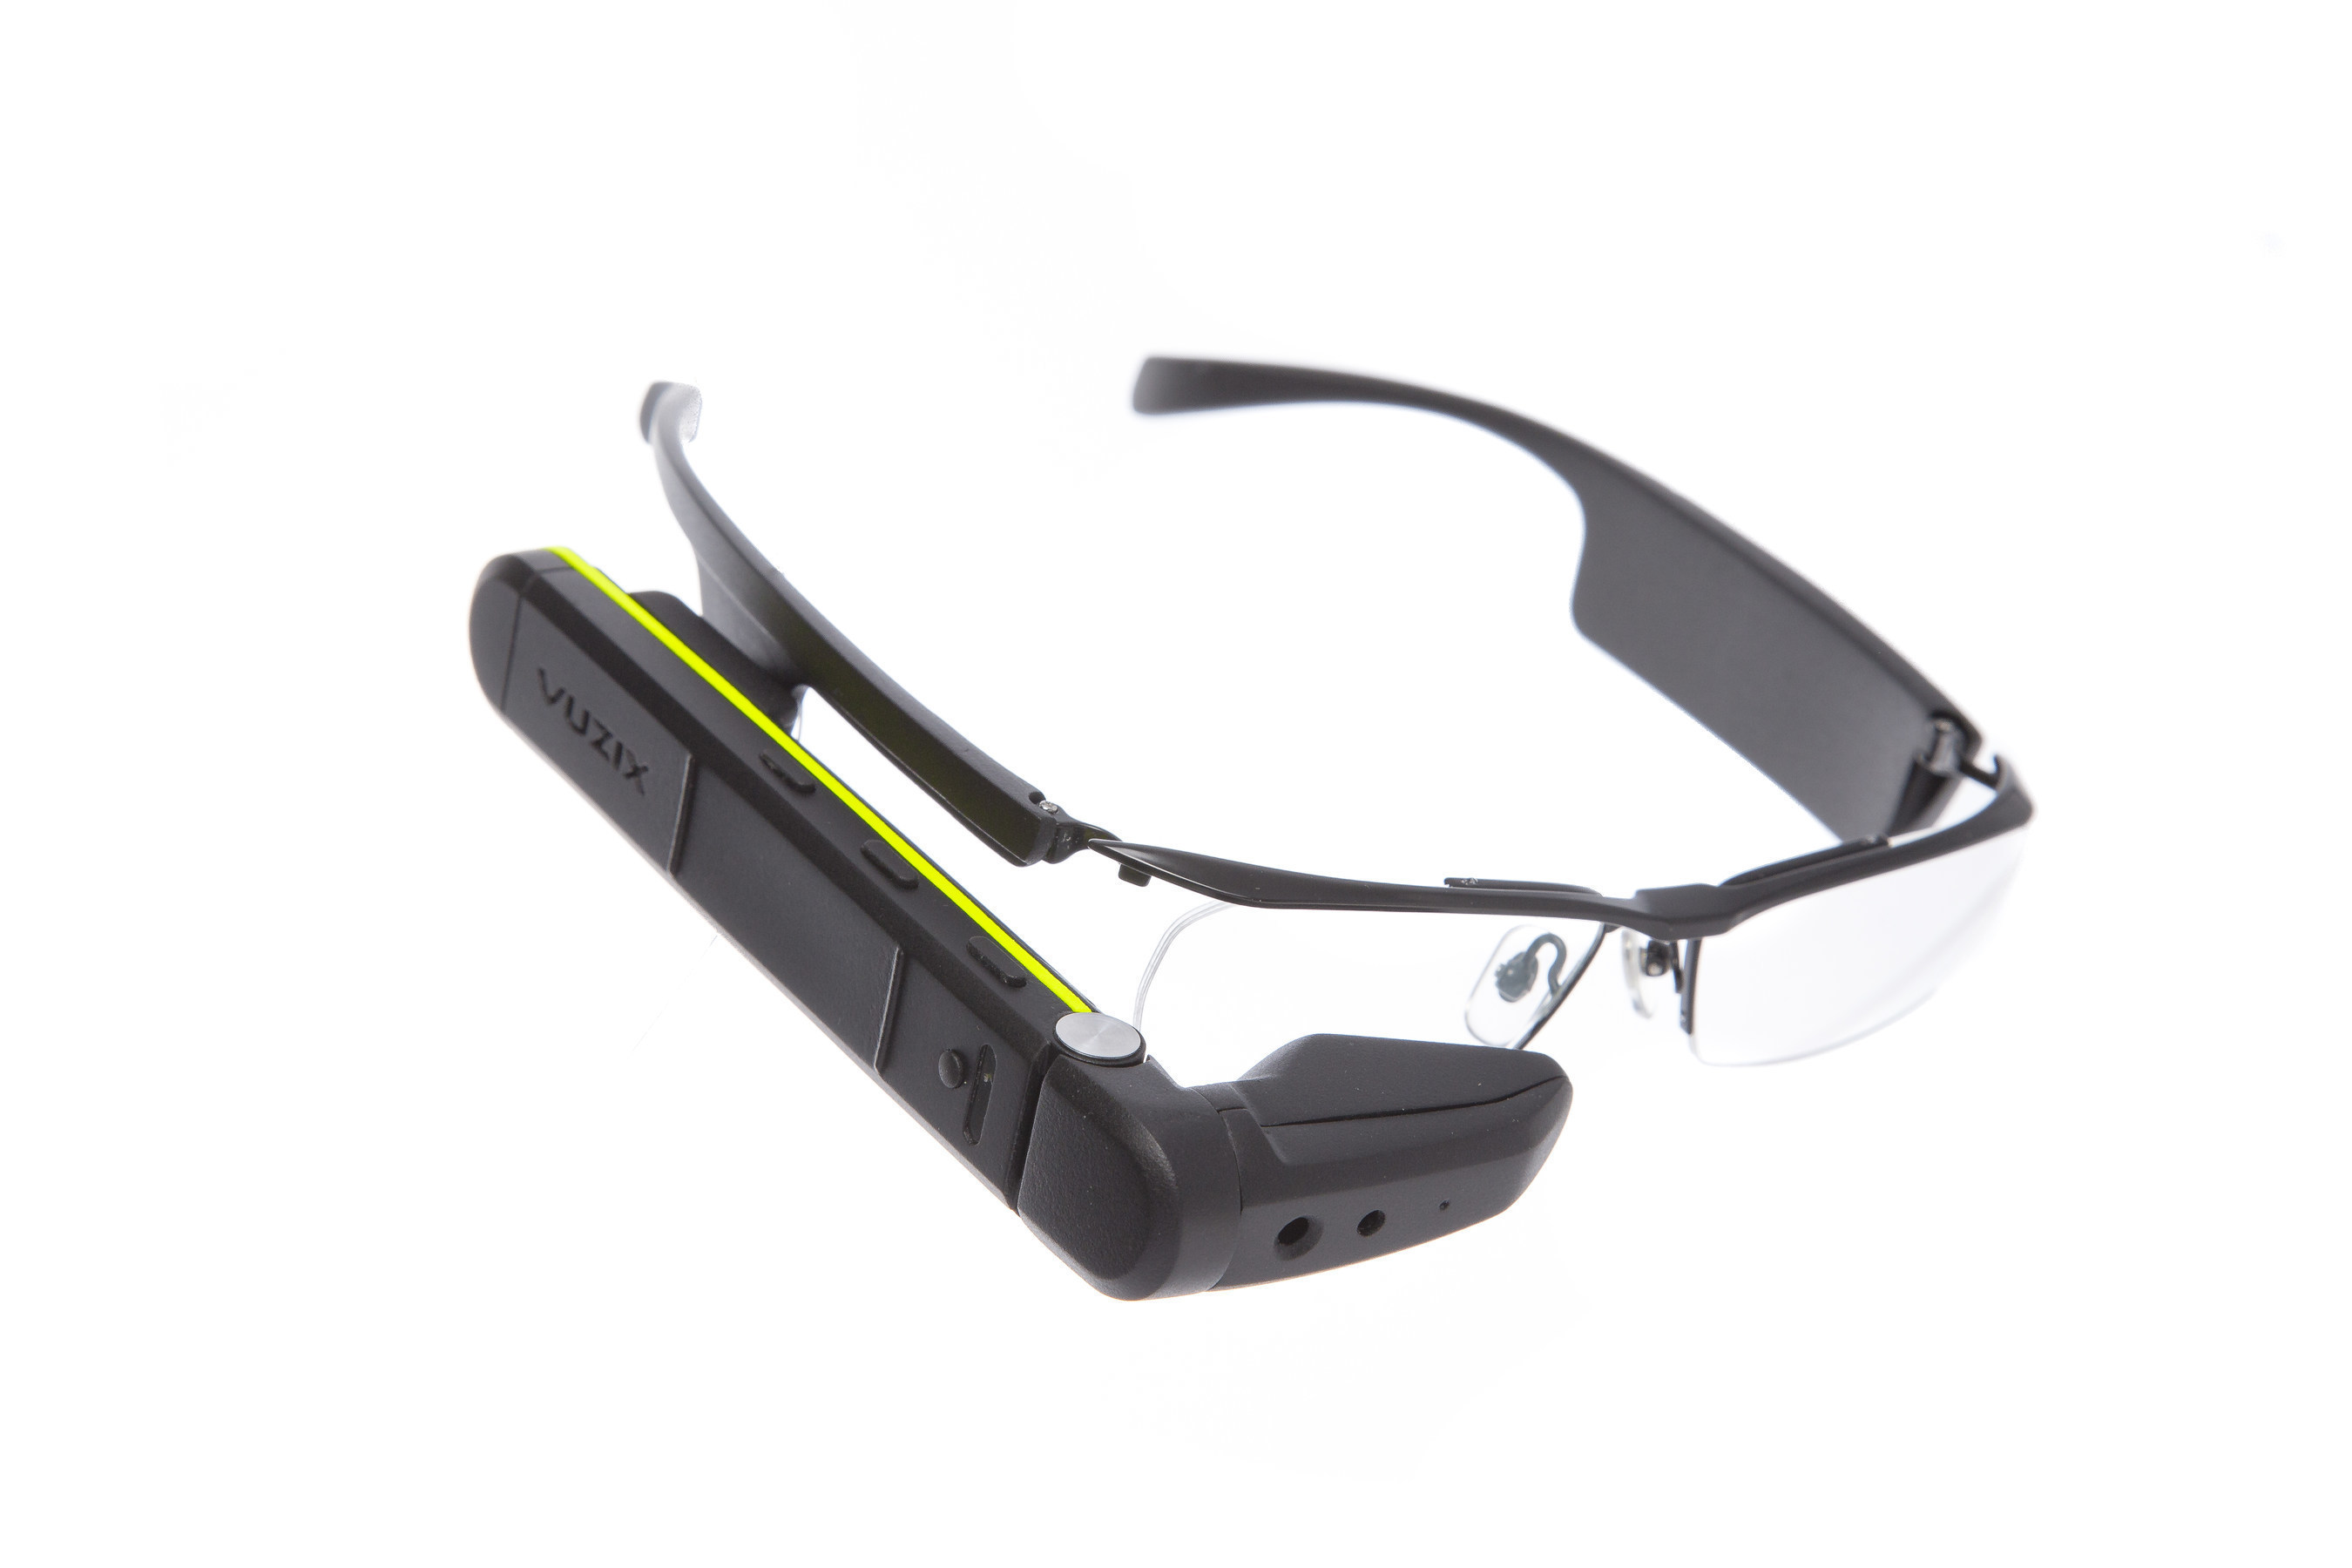 Vuzix to Launch M300 Next Generation Smart Glasses Pre-Order